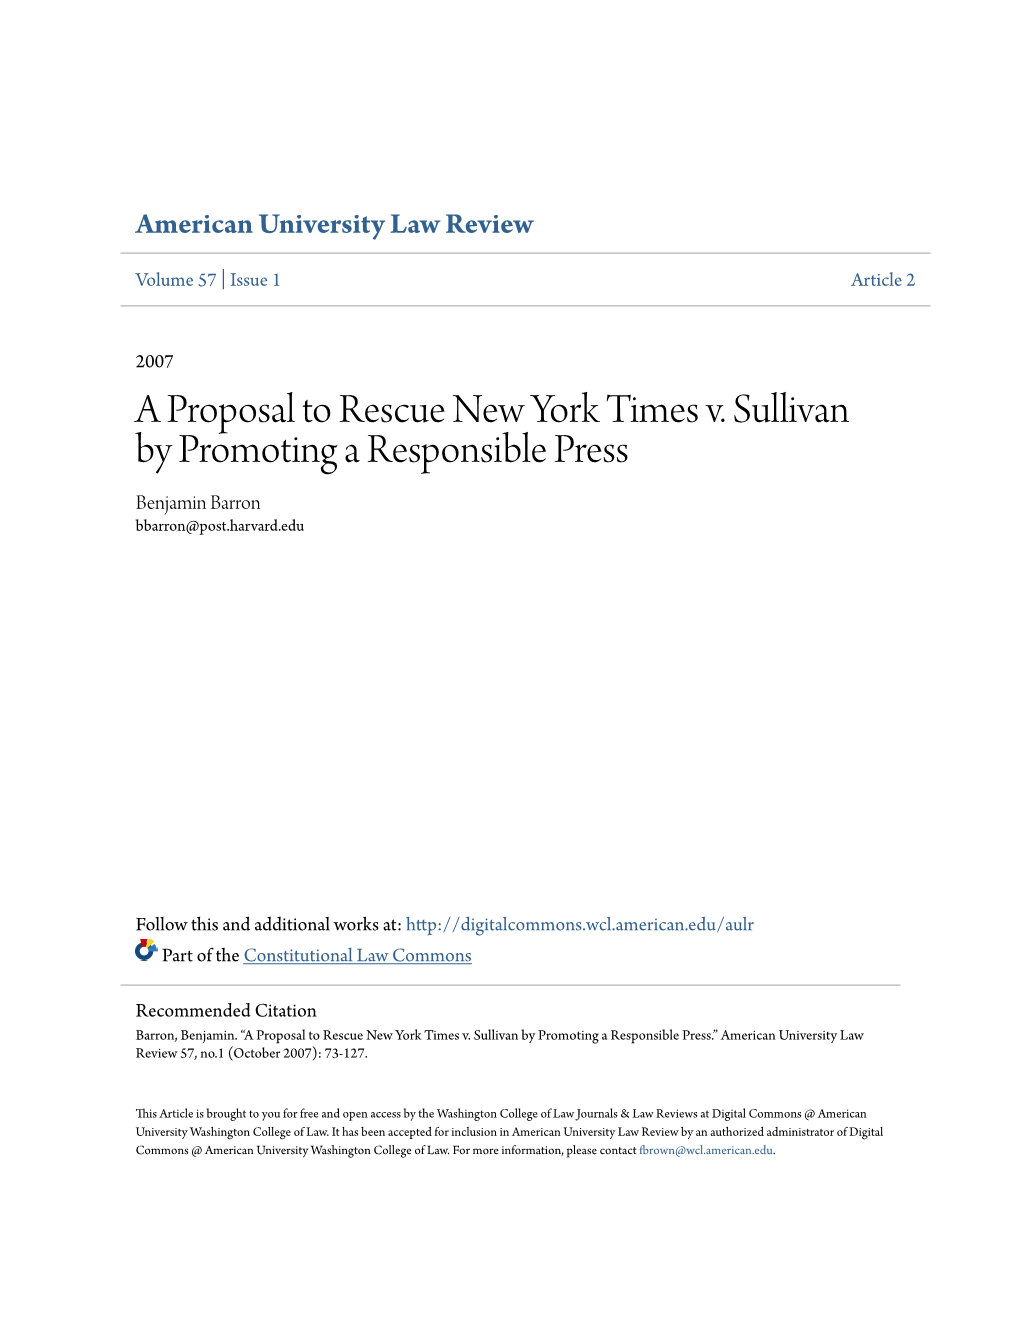 A Proposal to Rescue New York Times V. Sullivan by Promoting a Responsible Press Benjamin Barron Bbarron@Post.Harvard.Edu